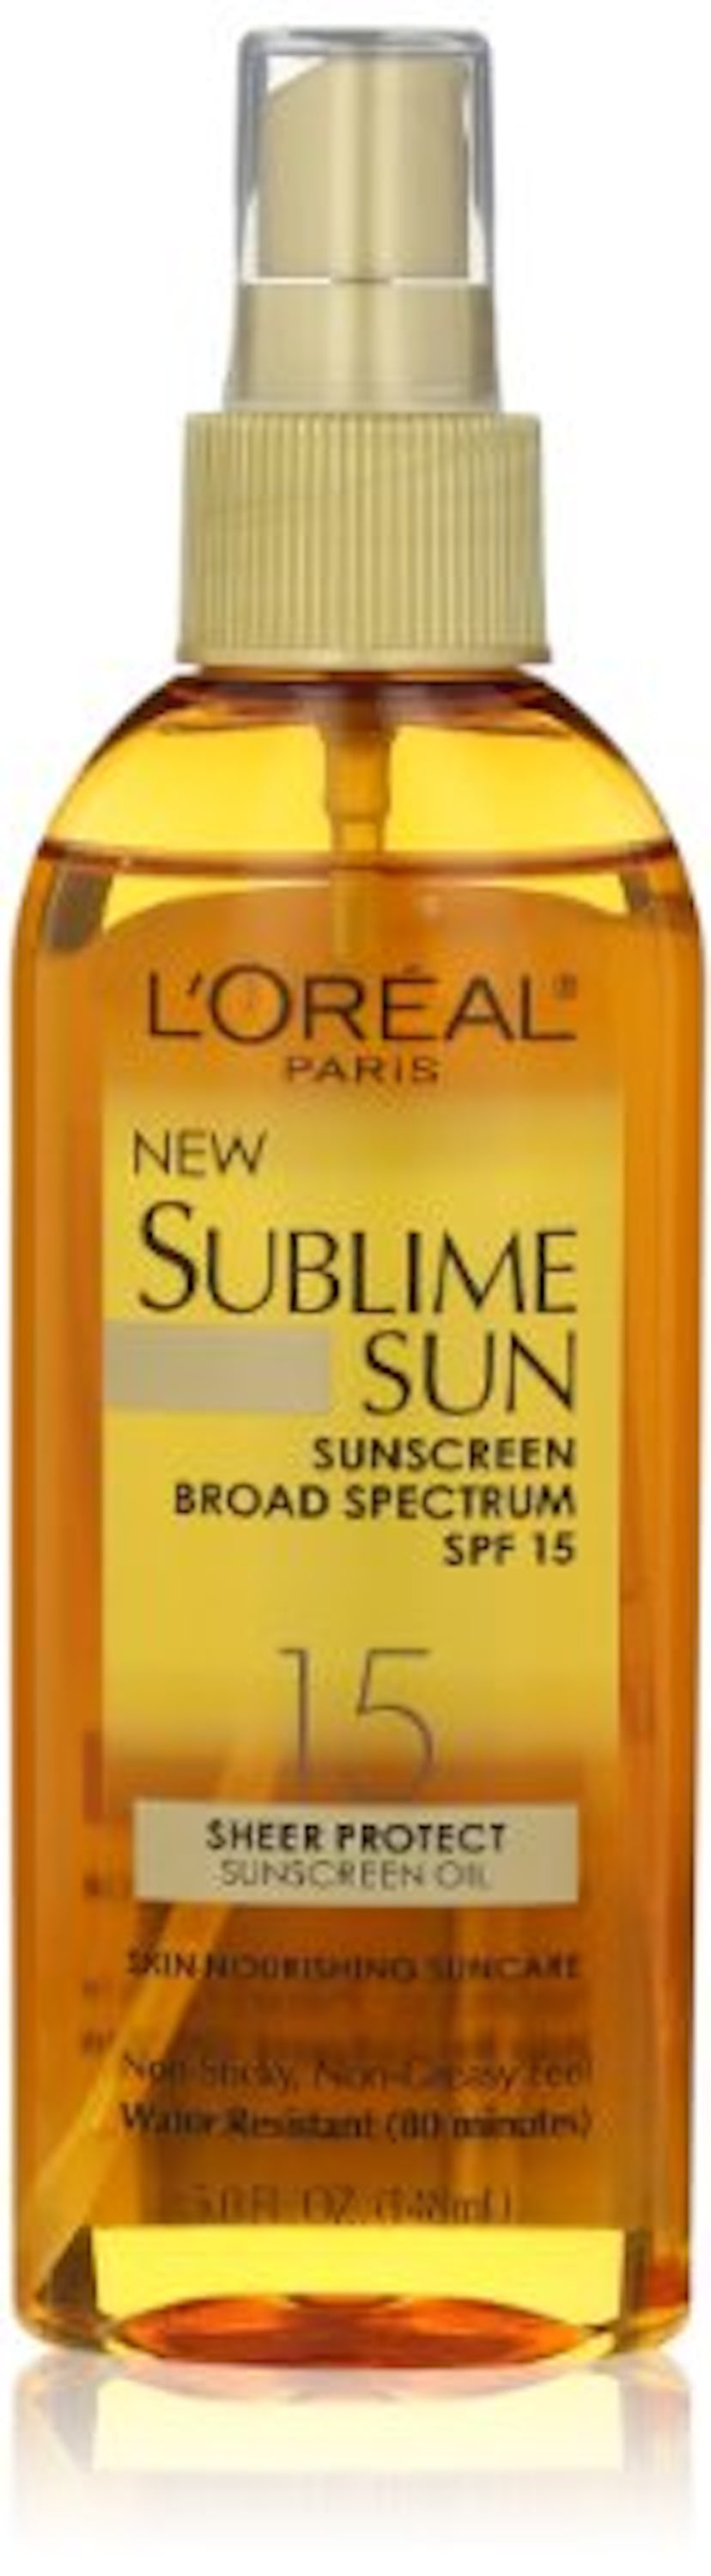 L'Oreal Paris Sublime Sun Sheer Protect SPF 30 Oil Spray